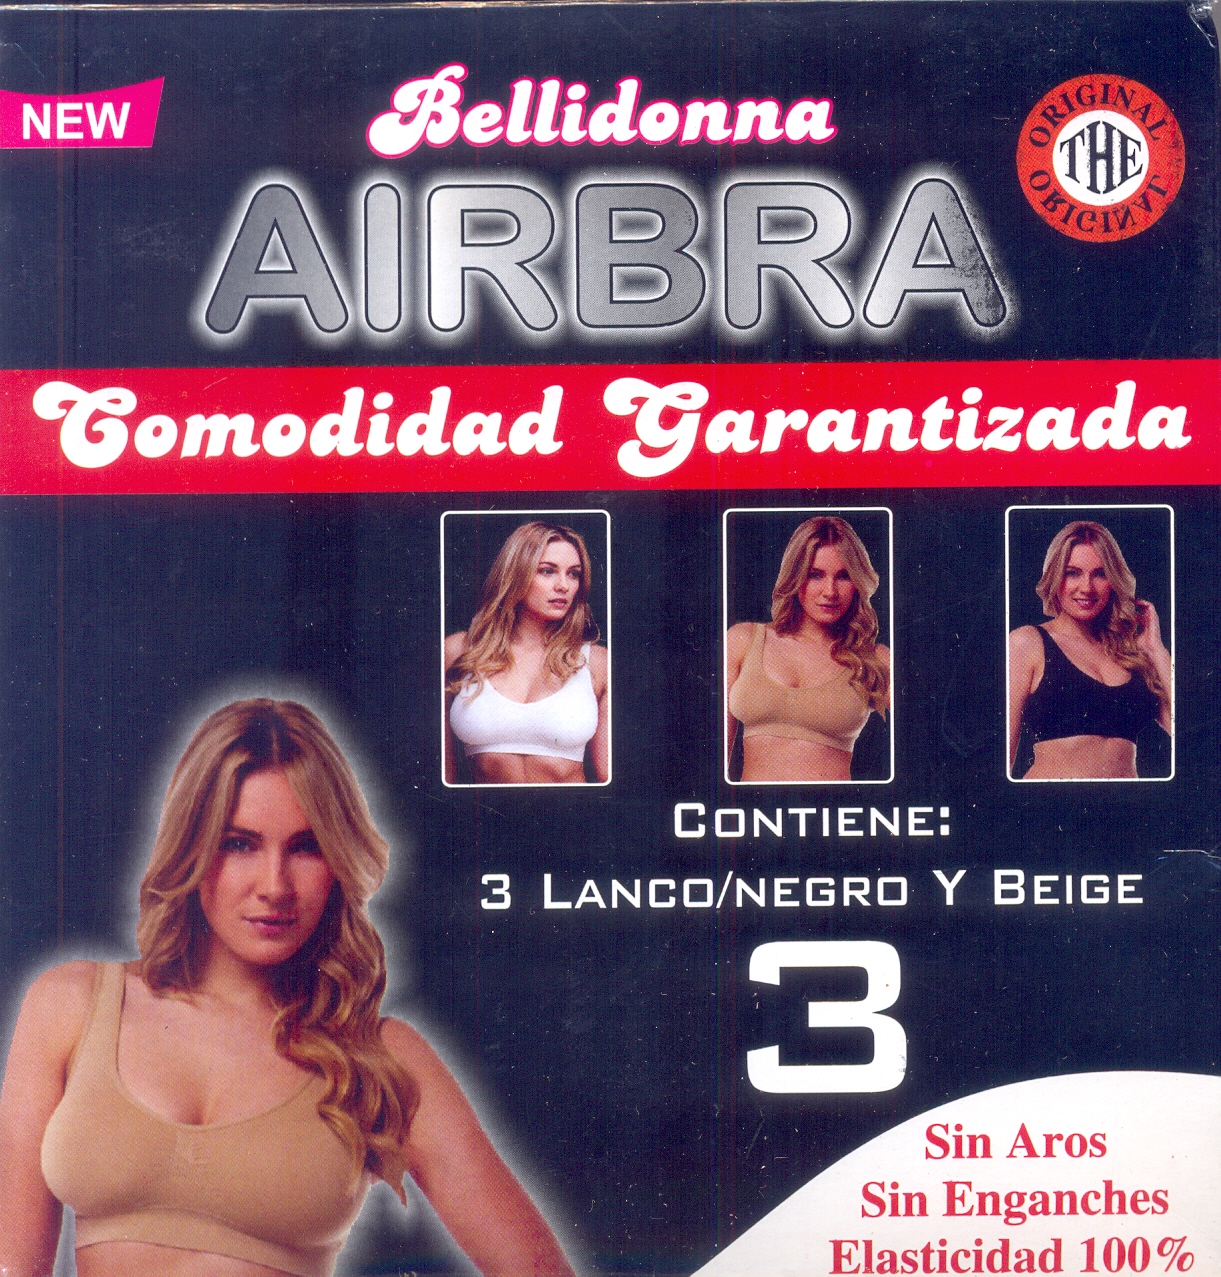 Bellidonna AIRBRA